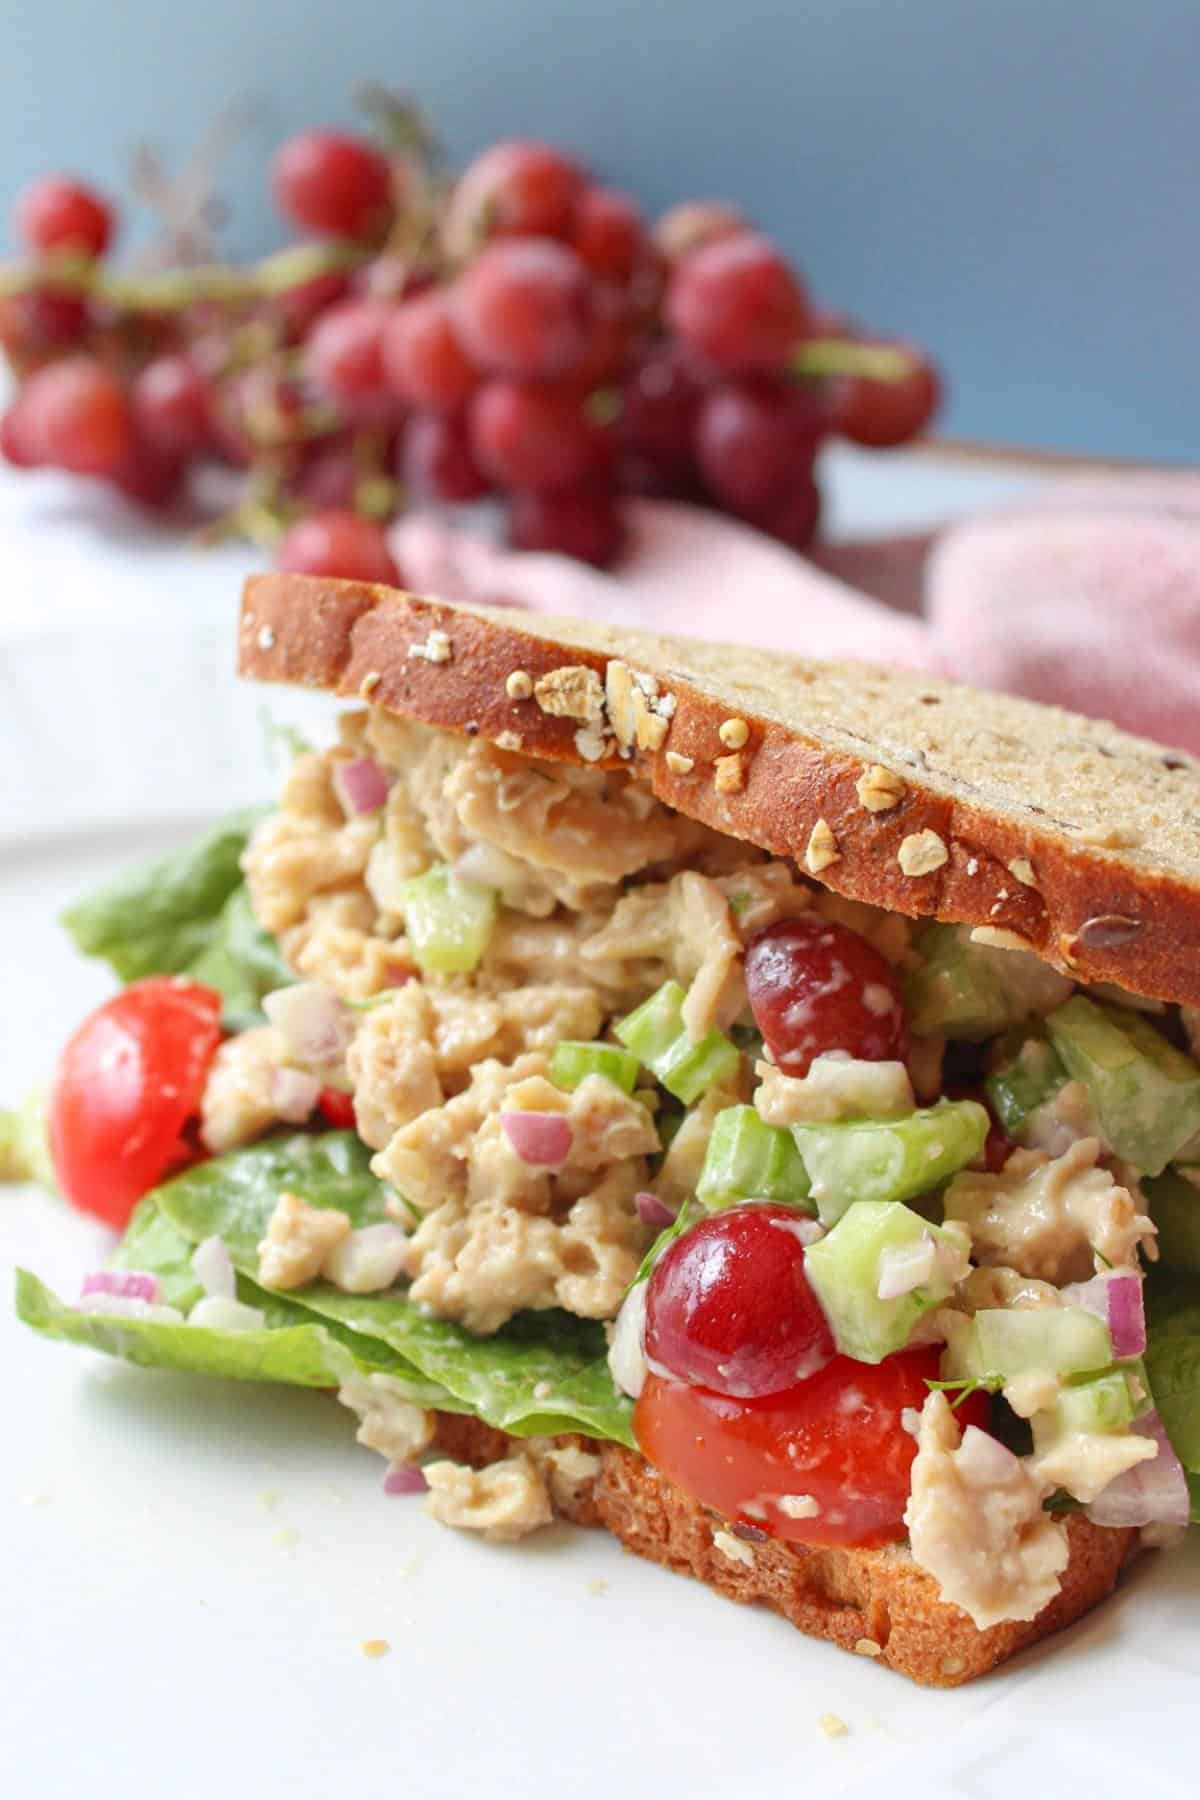 Vegan chicken salad sandwich on a plate.